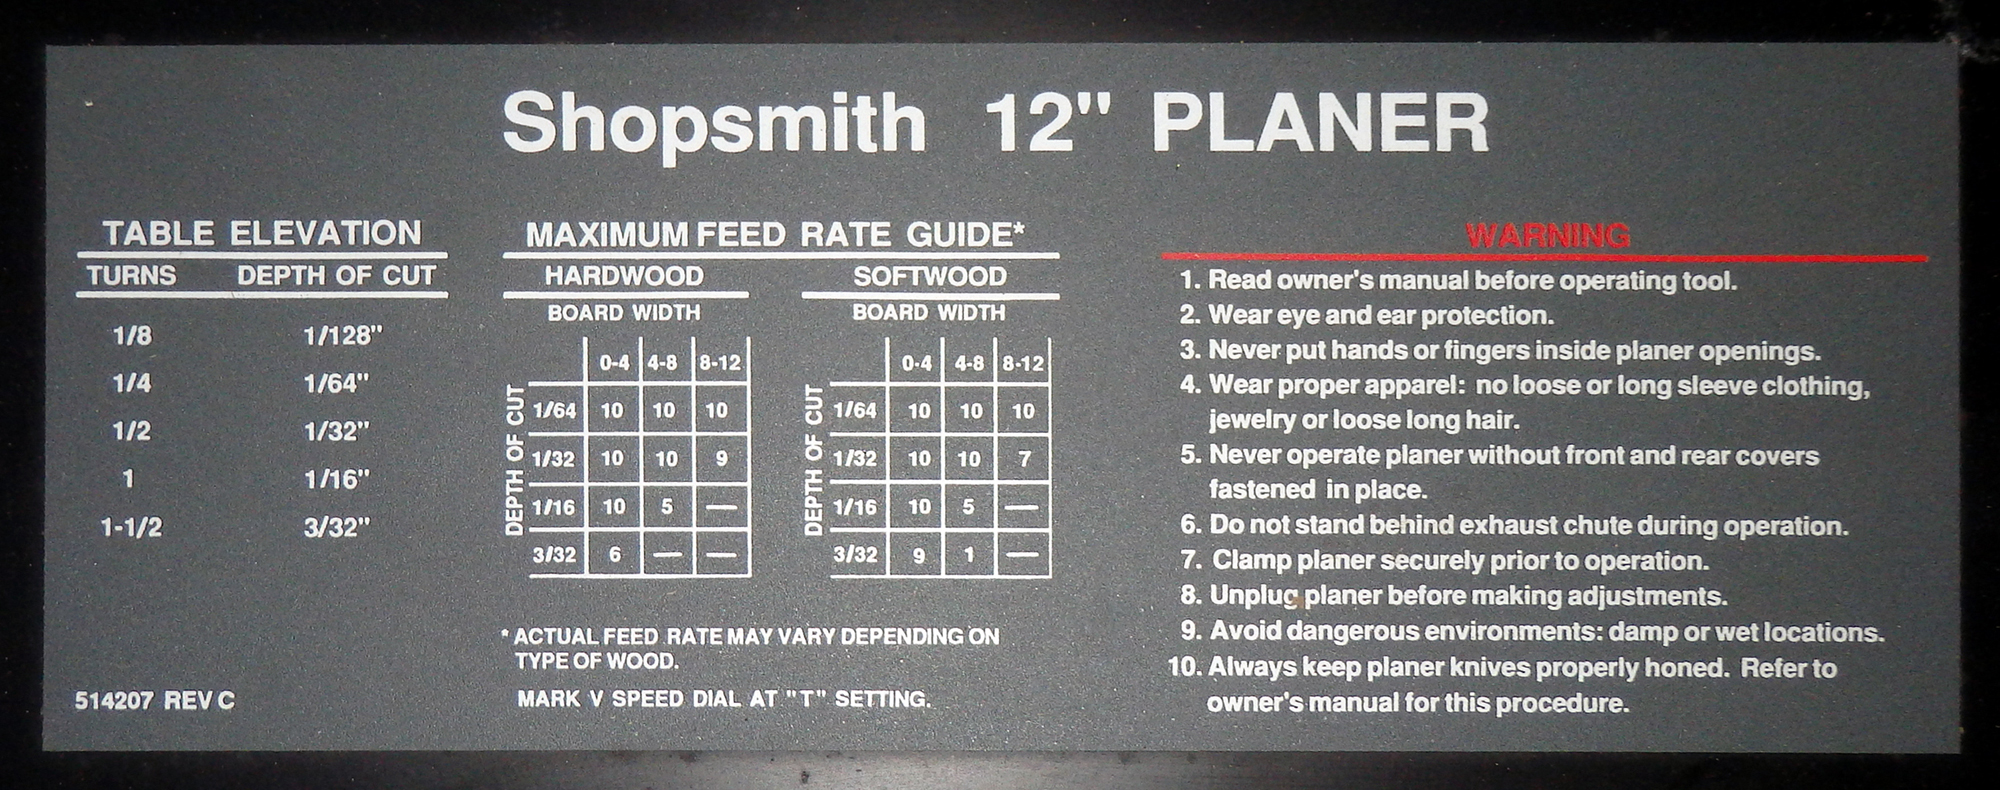 Mark V Mount Planer Label.jpg